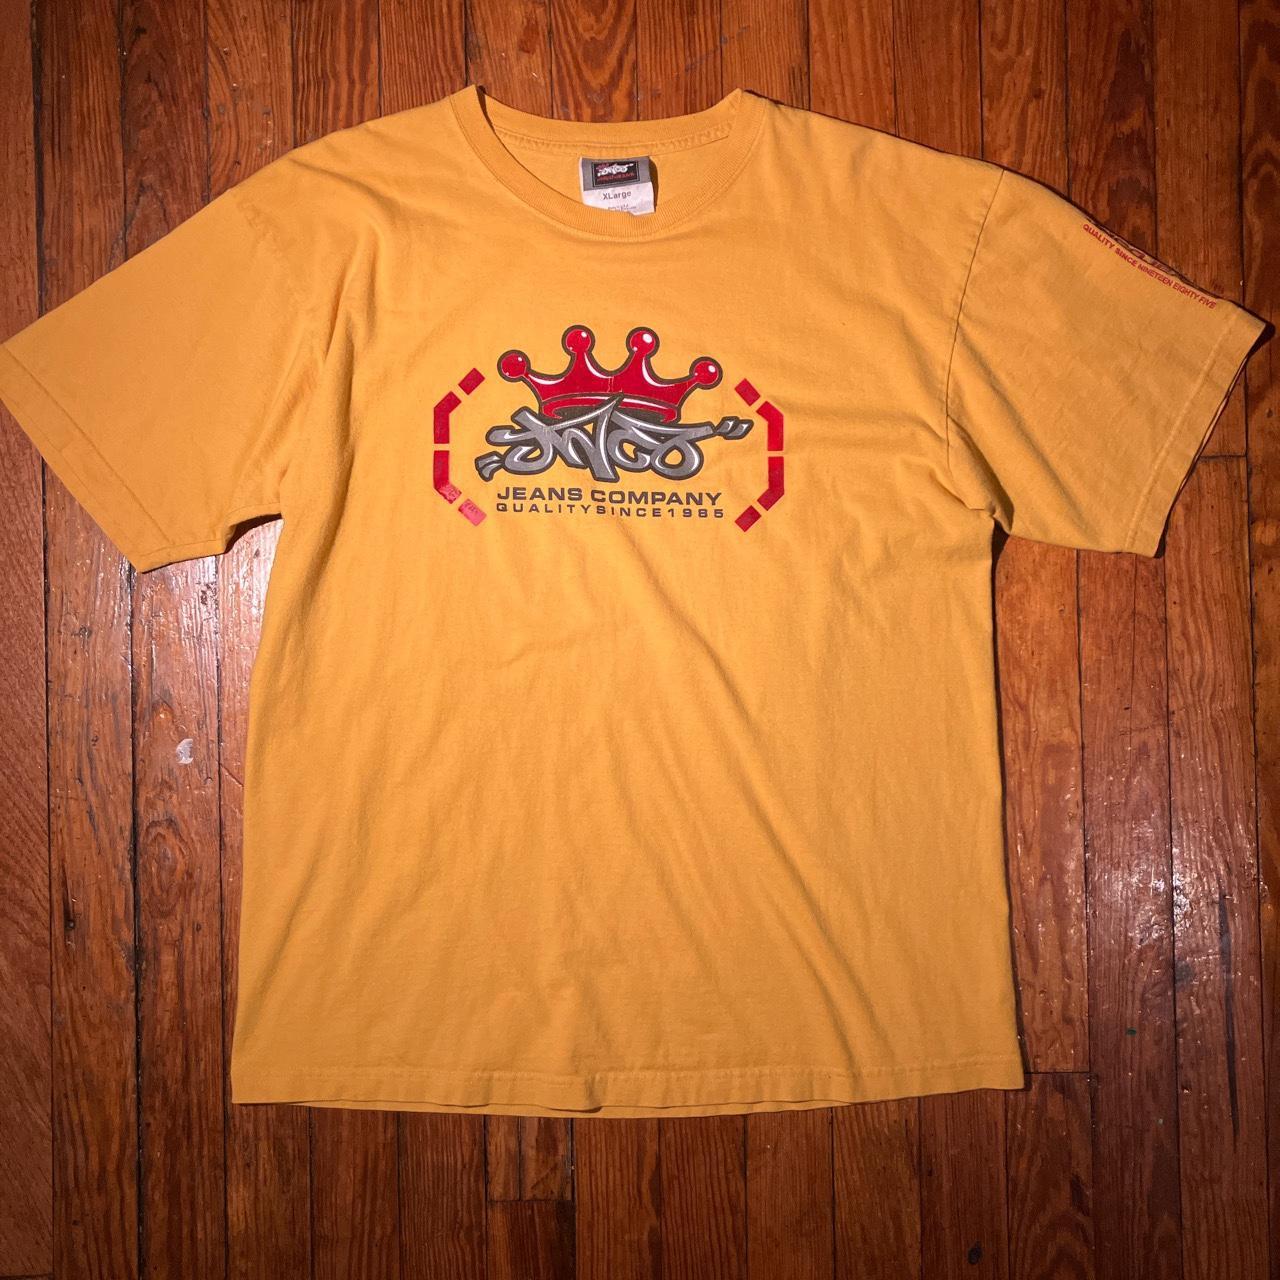 Rare Jnco Crown Tshirt made in USA vintage super... - Depop